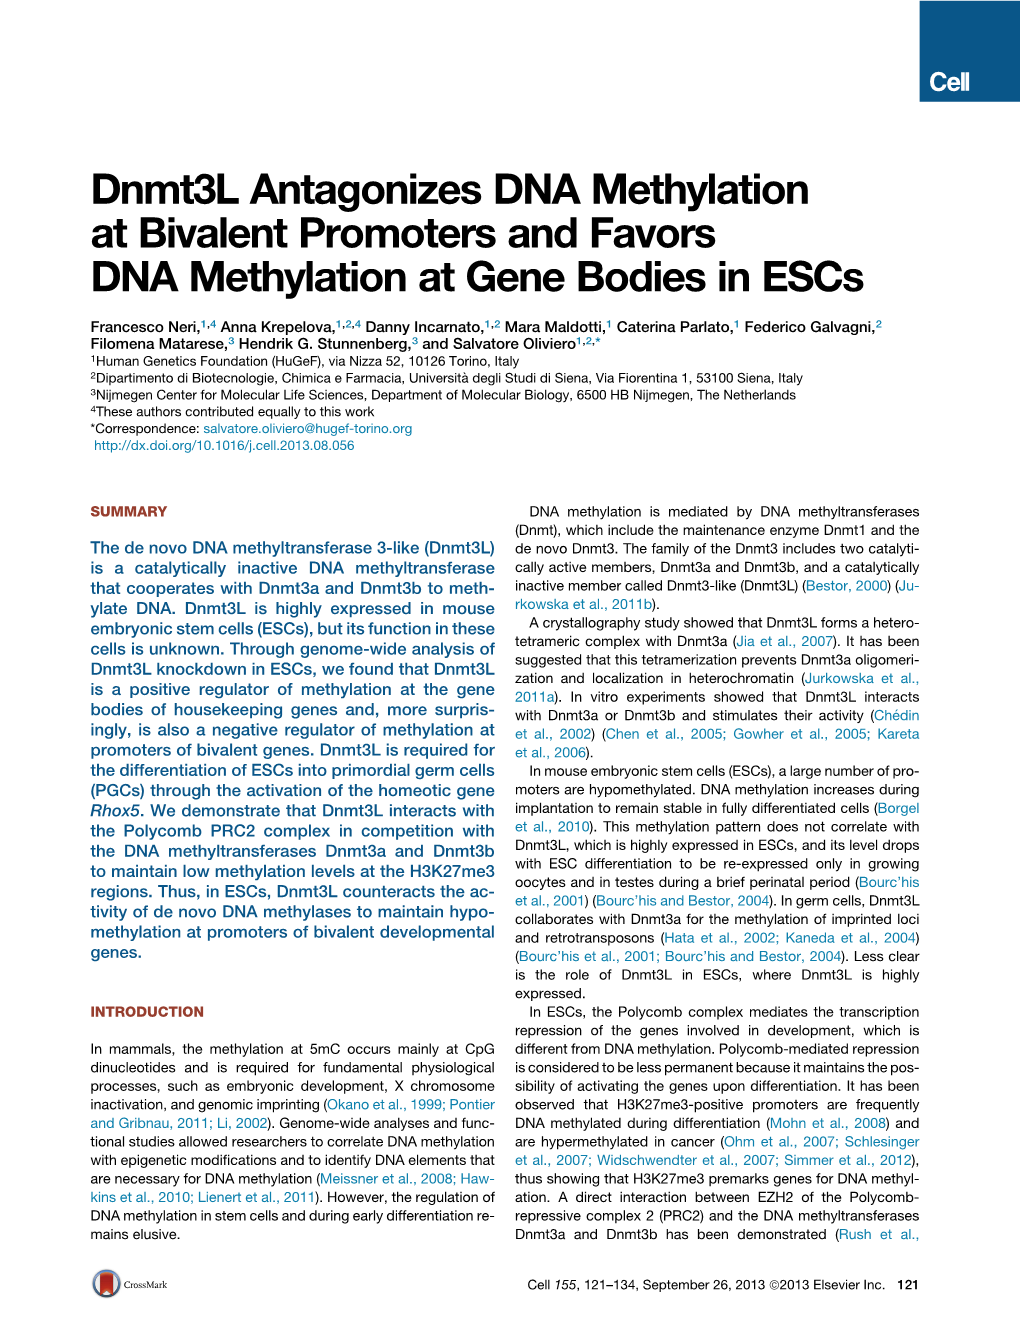 Dnmt3l Antagonizes DNA Methylation at Bivalent Promoters and Favors DNA Methylation at Gene Bodies in Escs